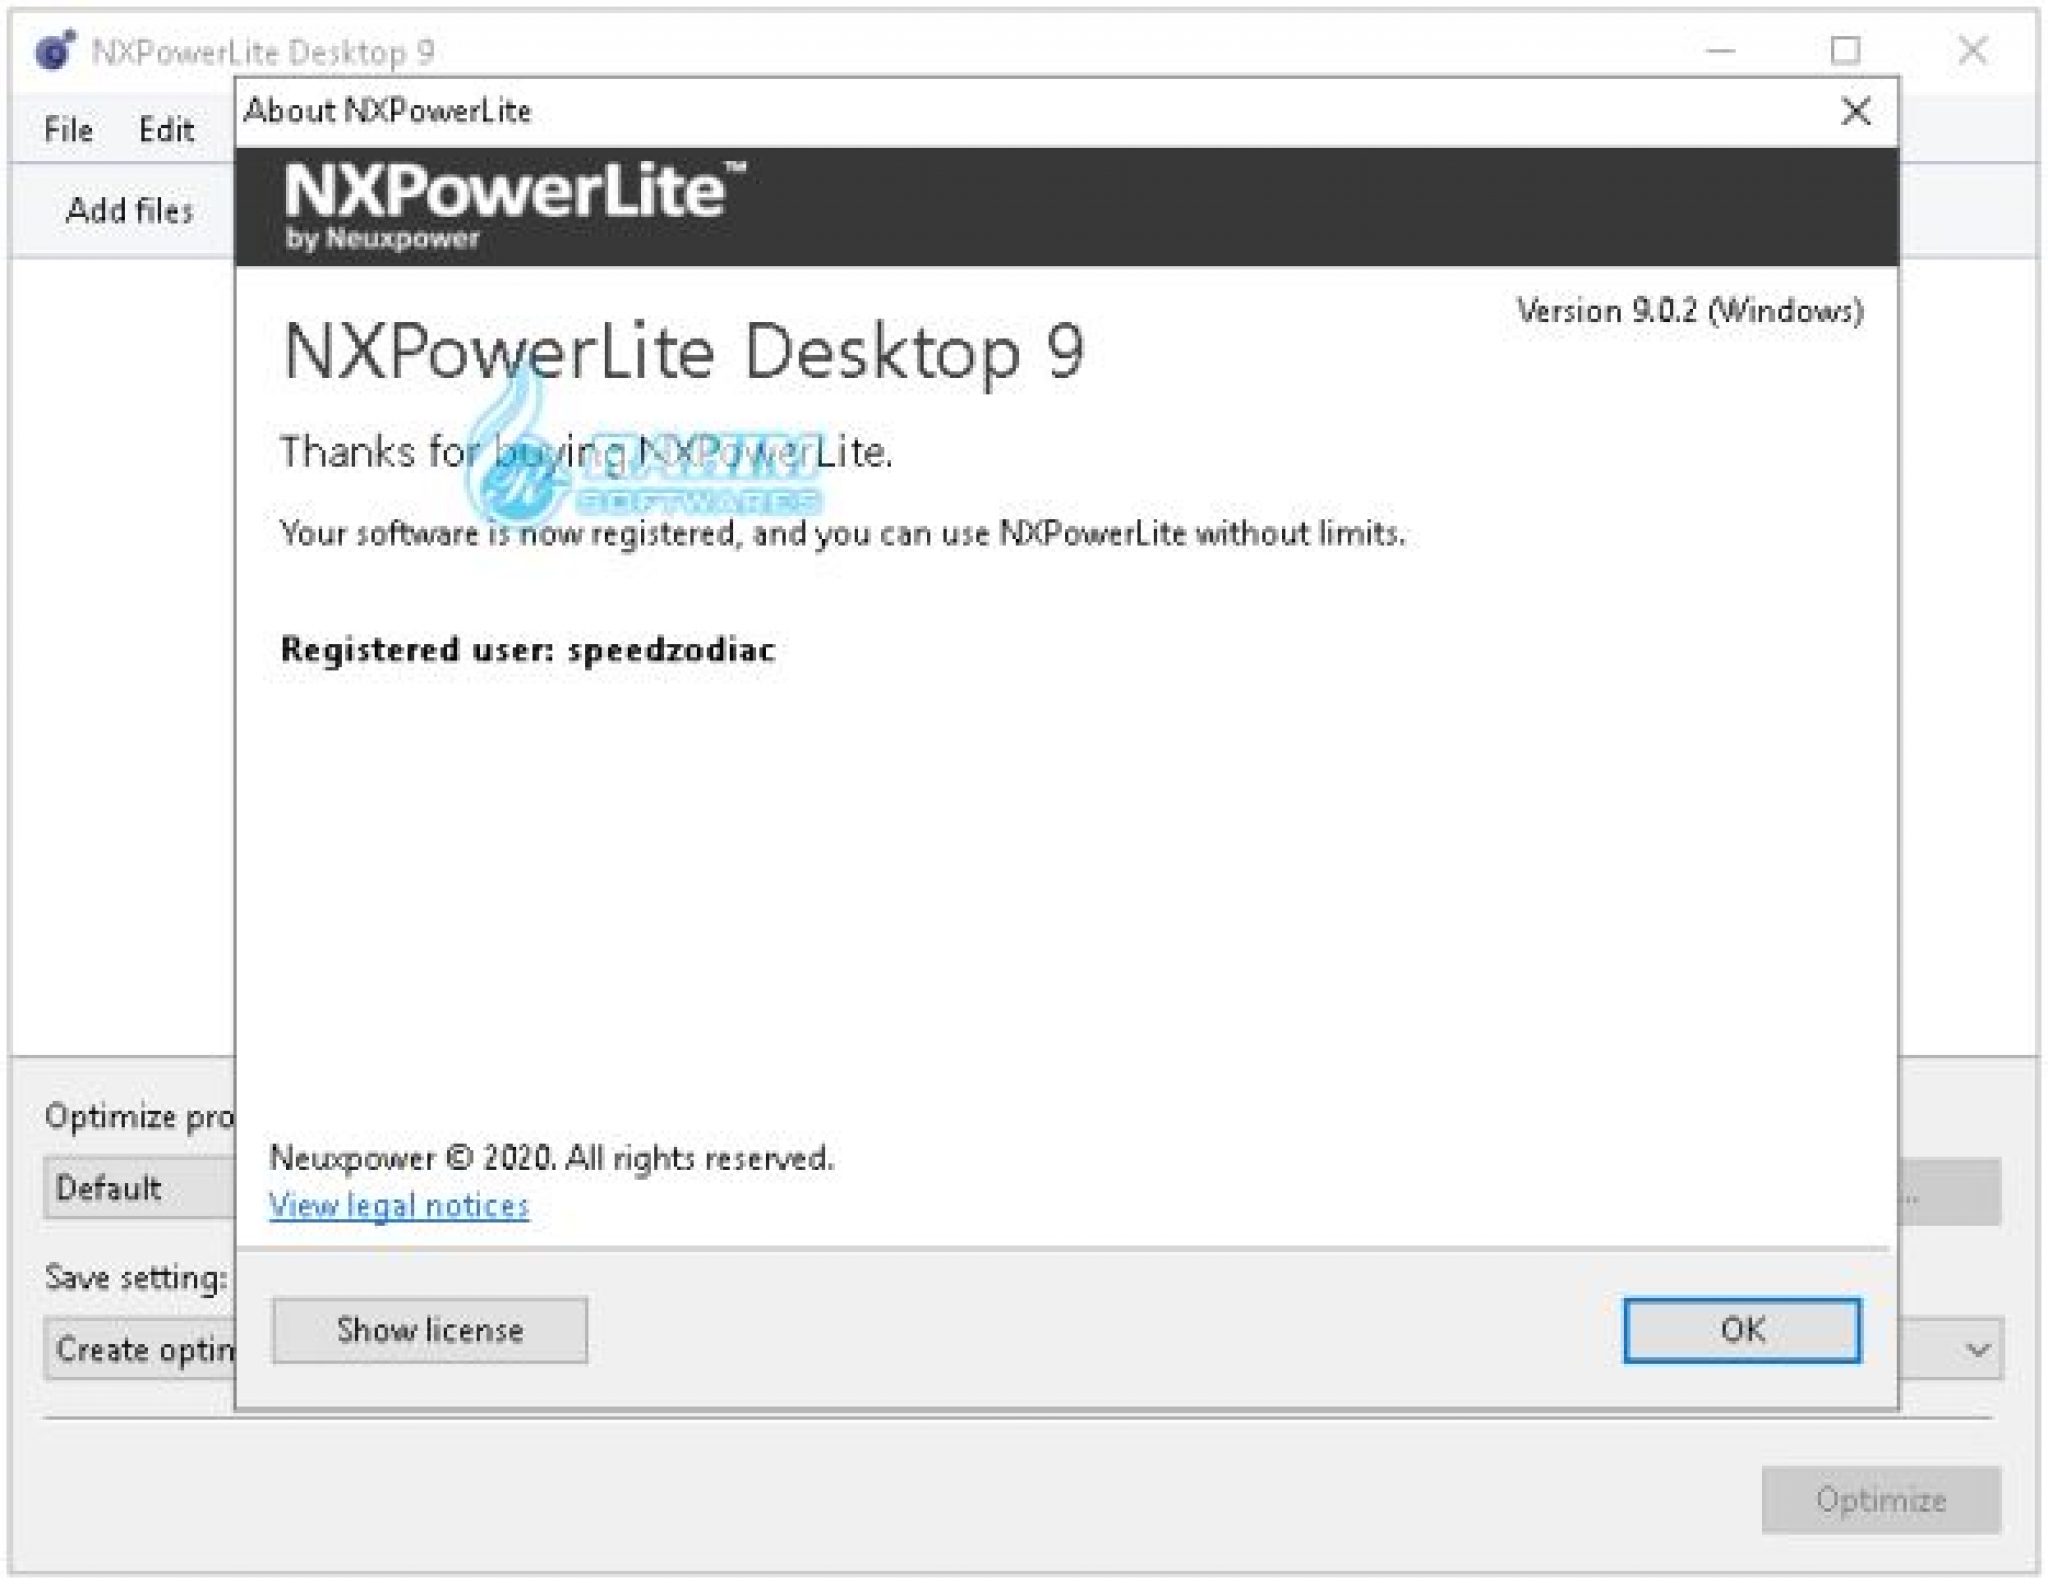 NXPowerLite Desktop 10.0.1 instal the last version for iphone